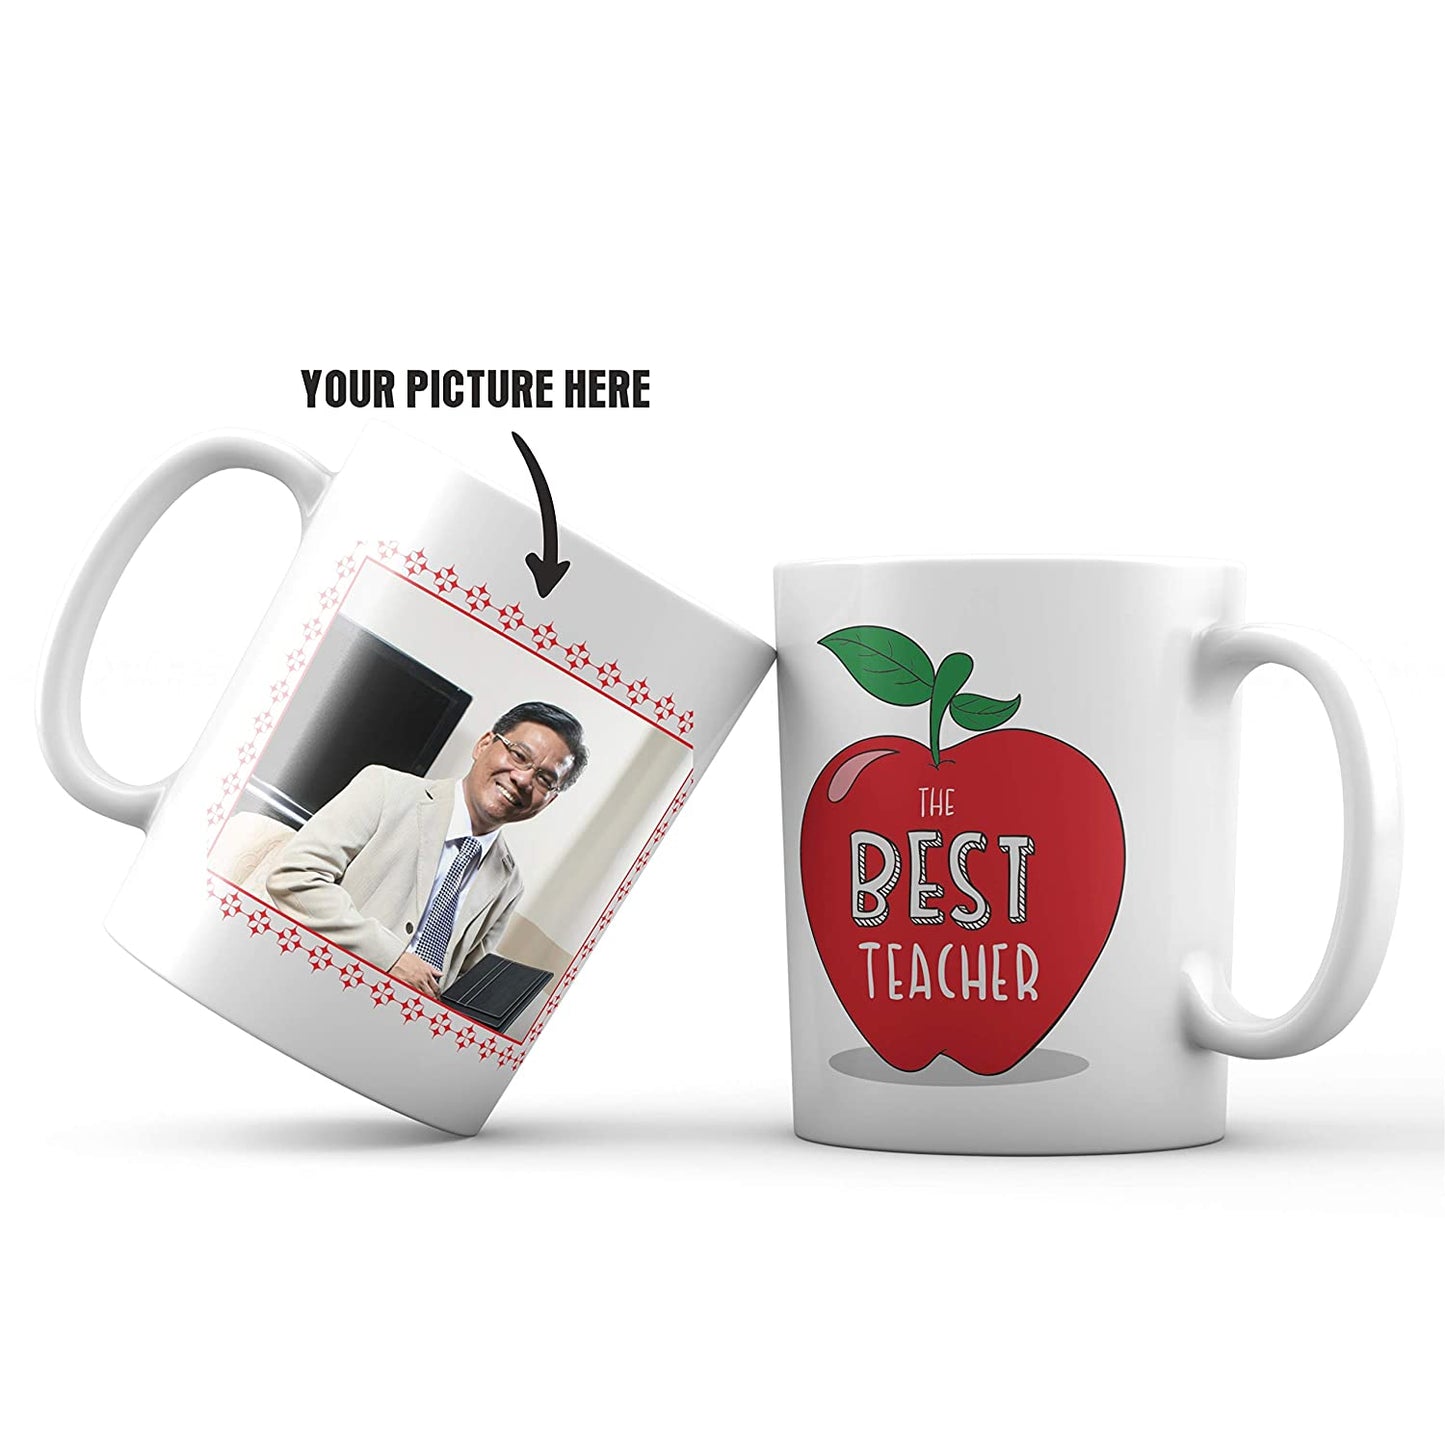 iberry's Customized/ Personalized Photo Coffee Mugs | Personalized mug for Teacher | Best teacher photo mug - (69)